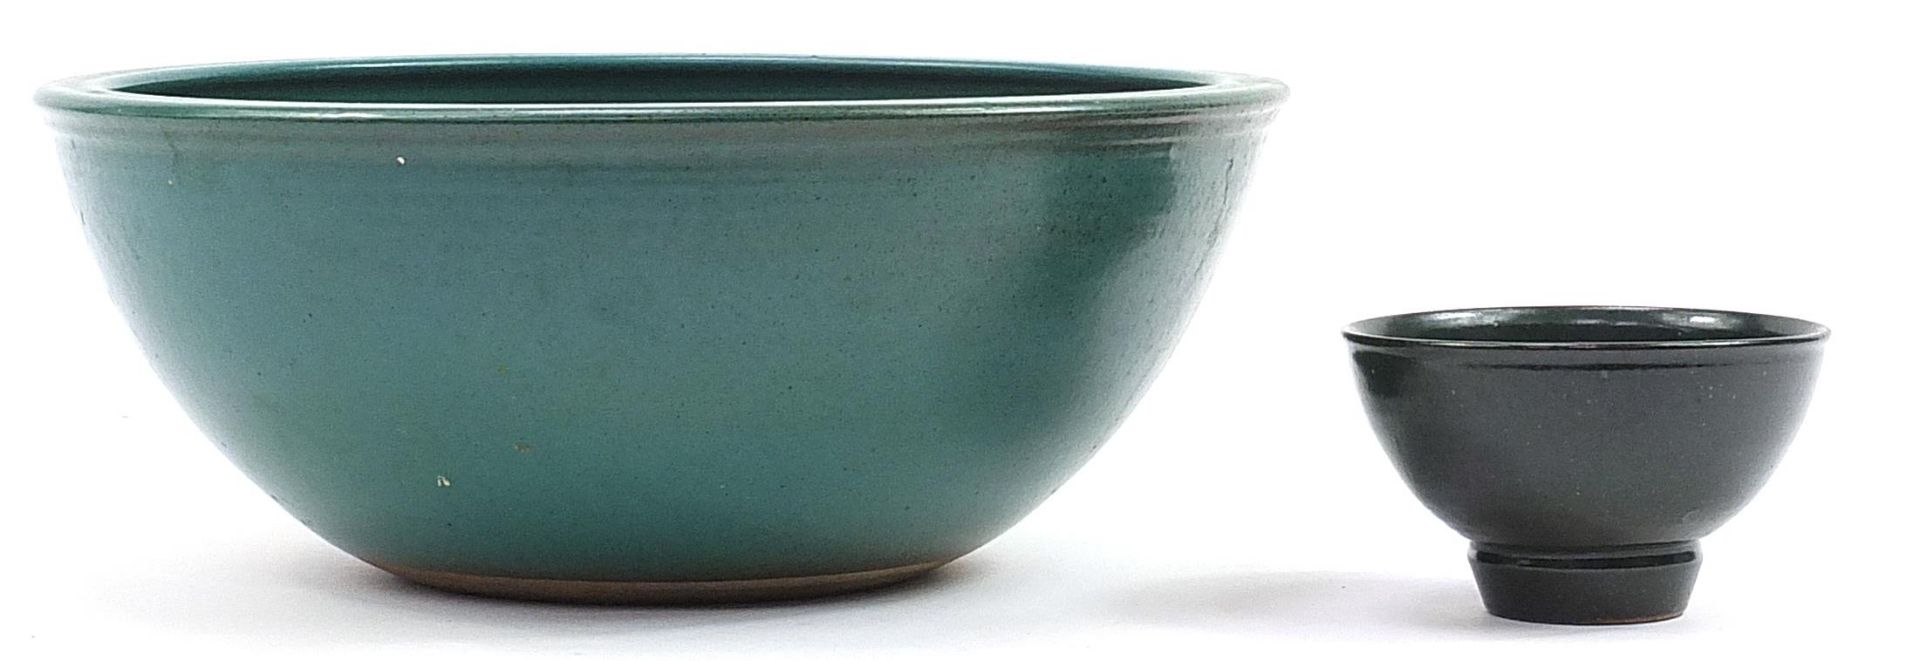 Two David Lloyd Jones studio pottery bowls having green glazes, the largest 39.5cm in diameter - Image 2 of 4